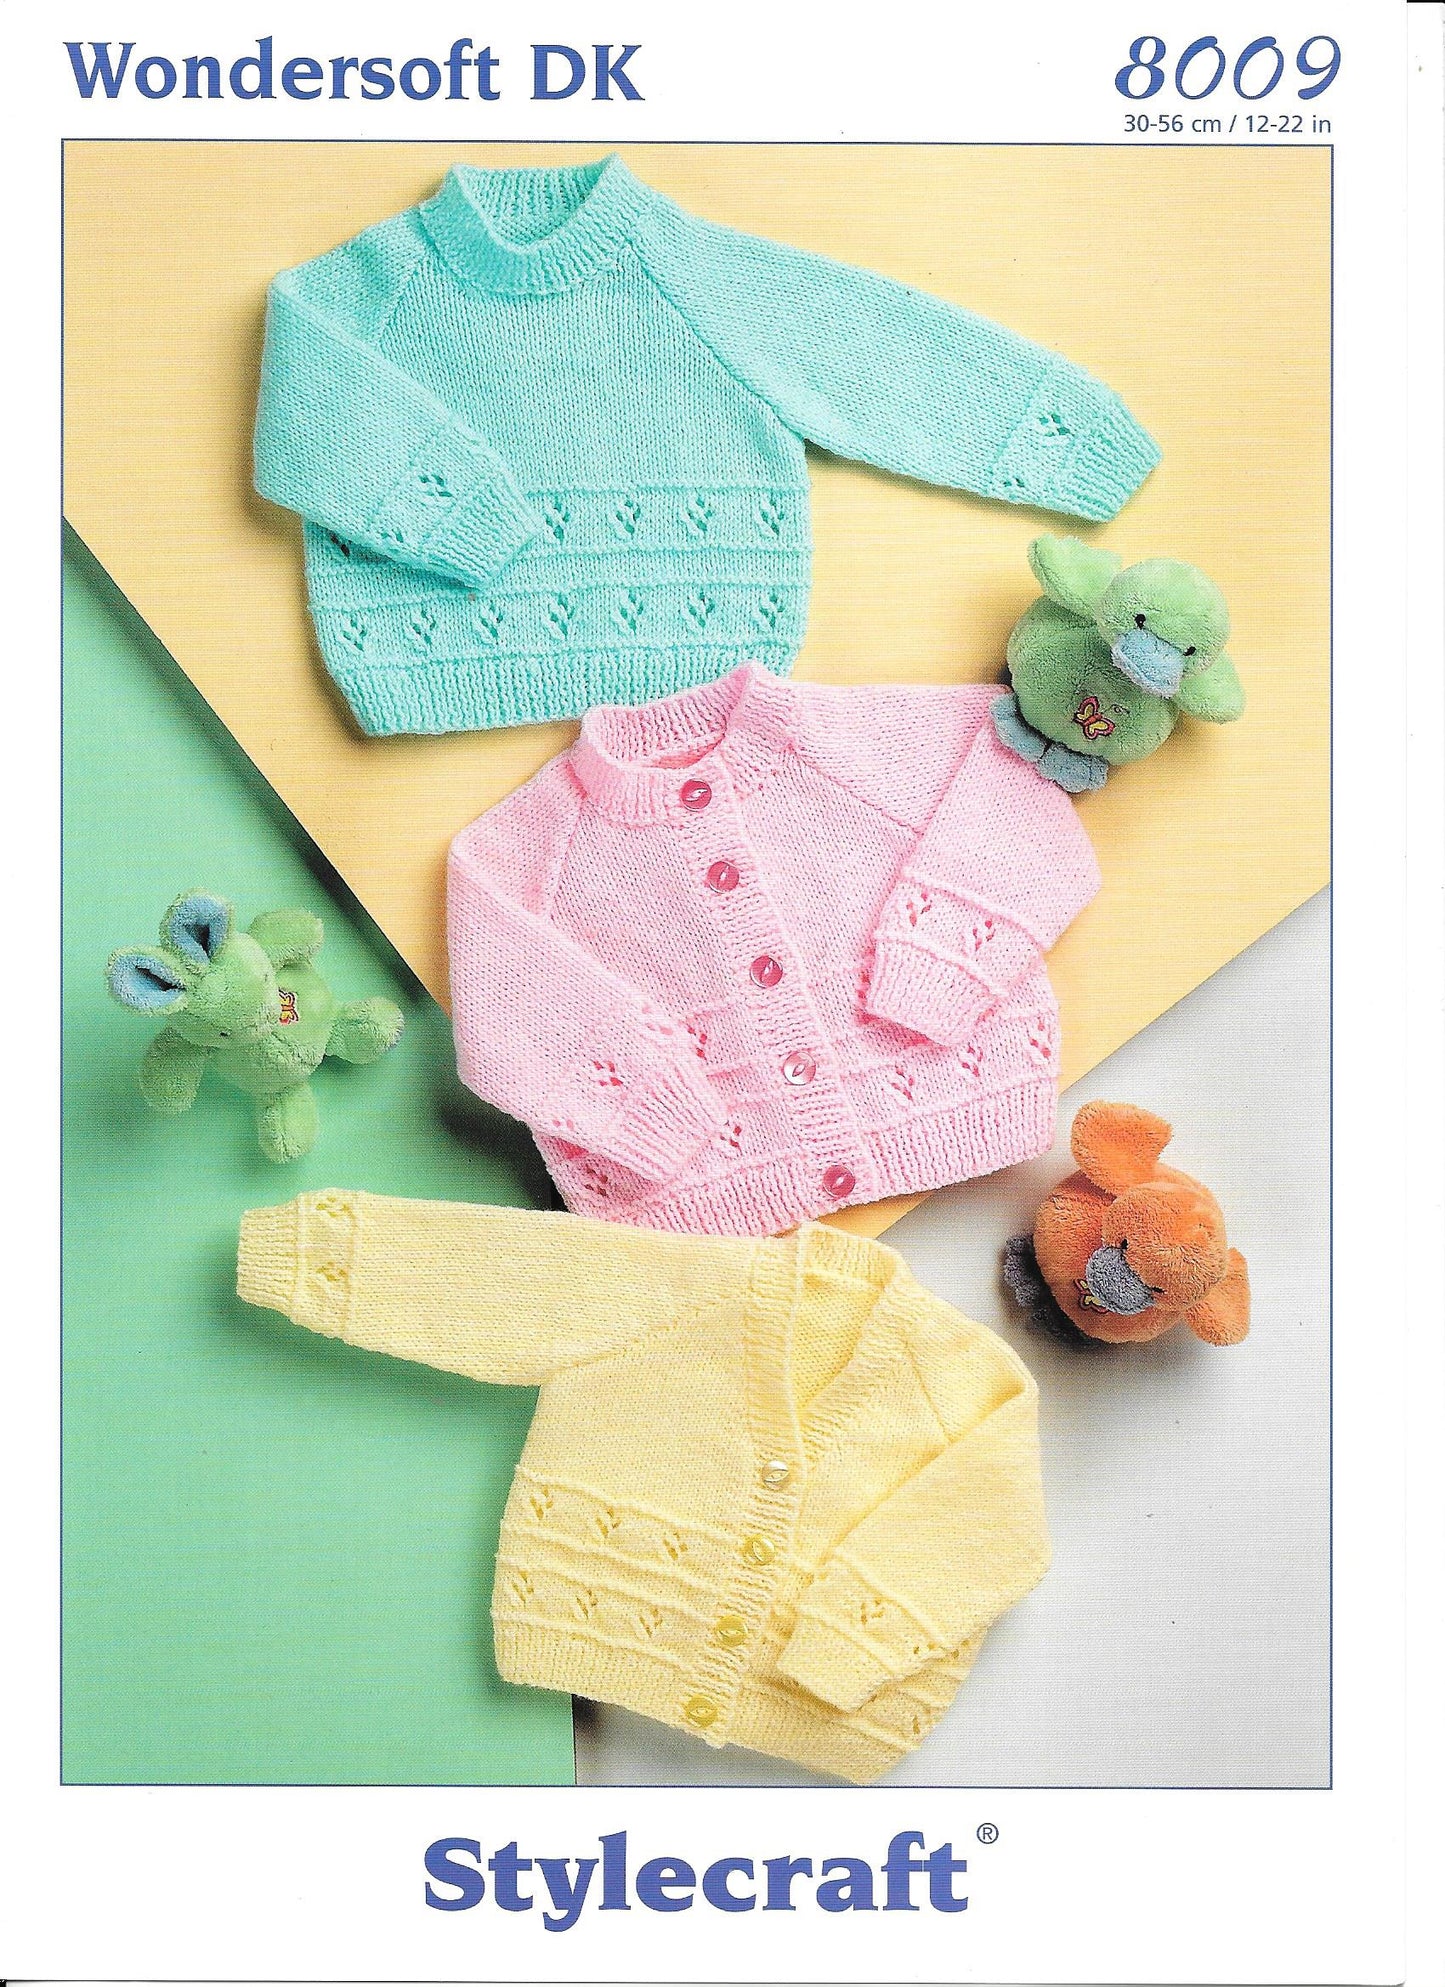 8009 Stylecraft Knitting Pattern. Child's cardigan/sweater. DK